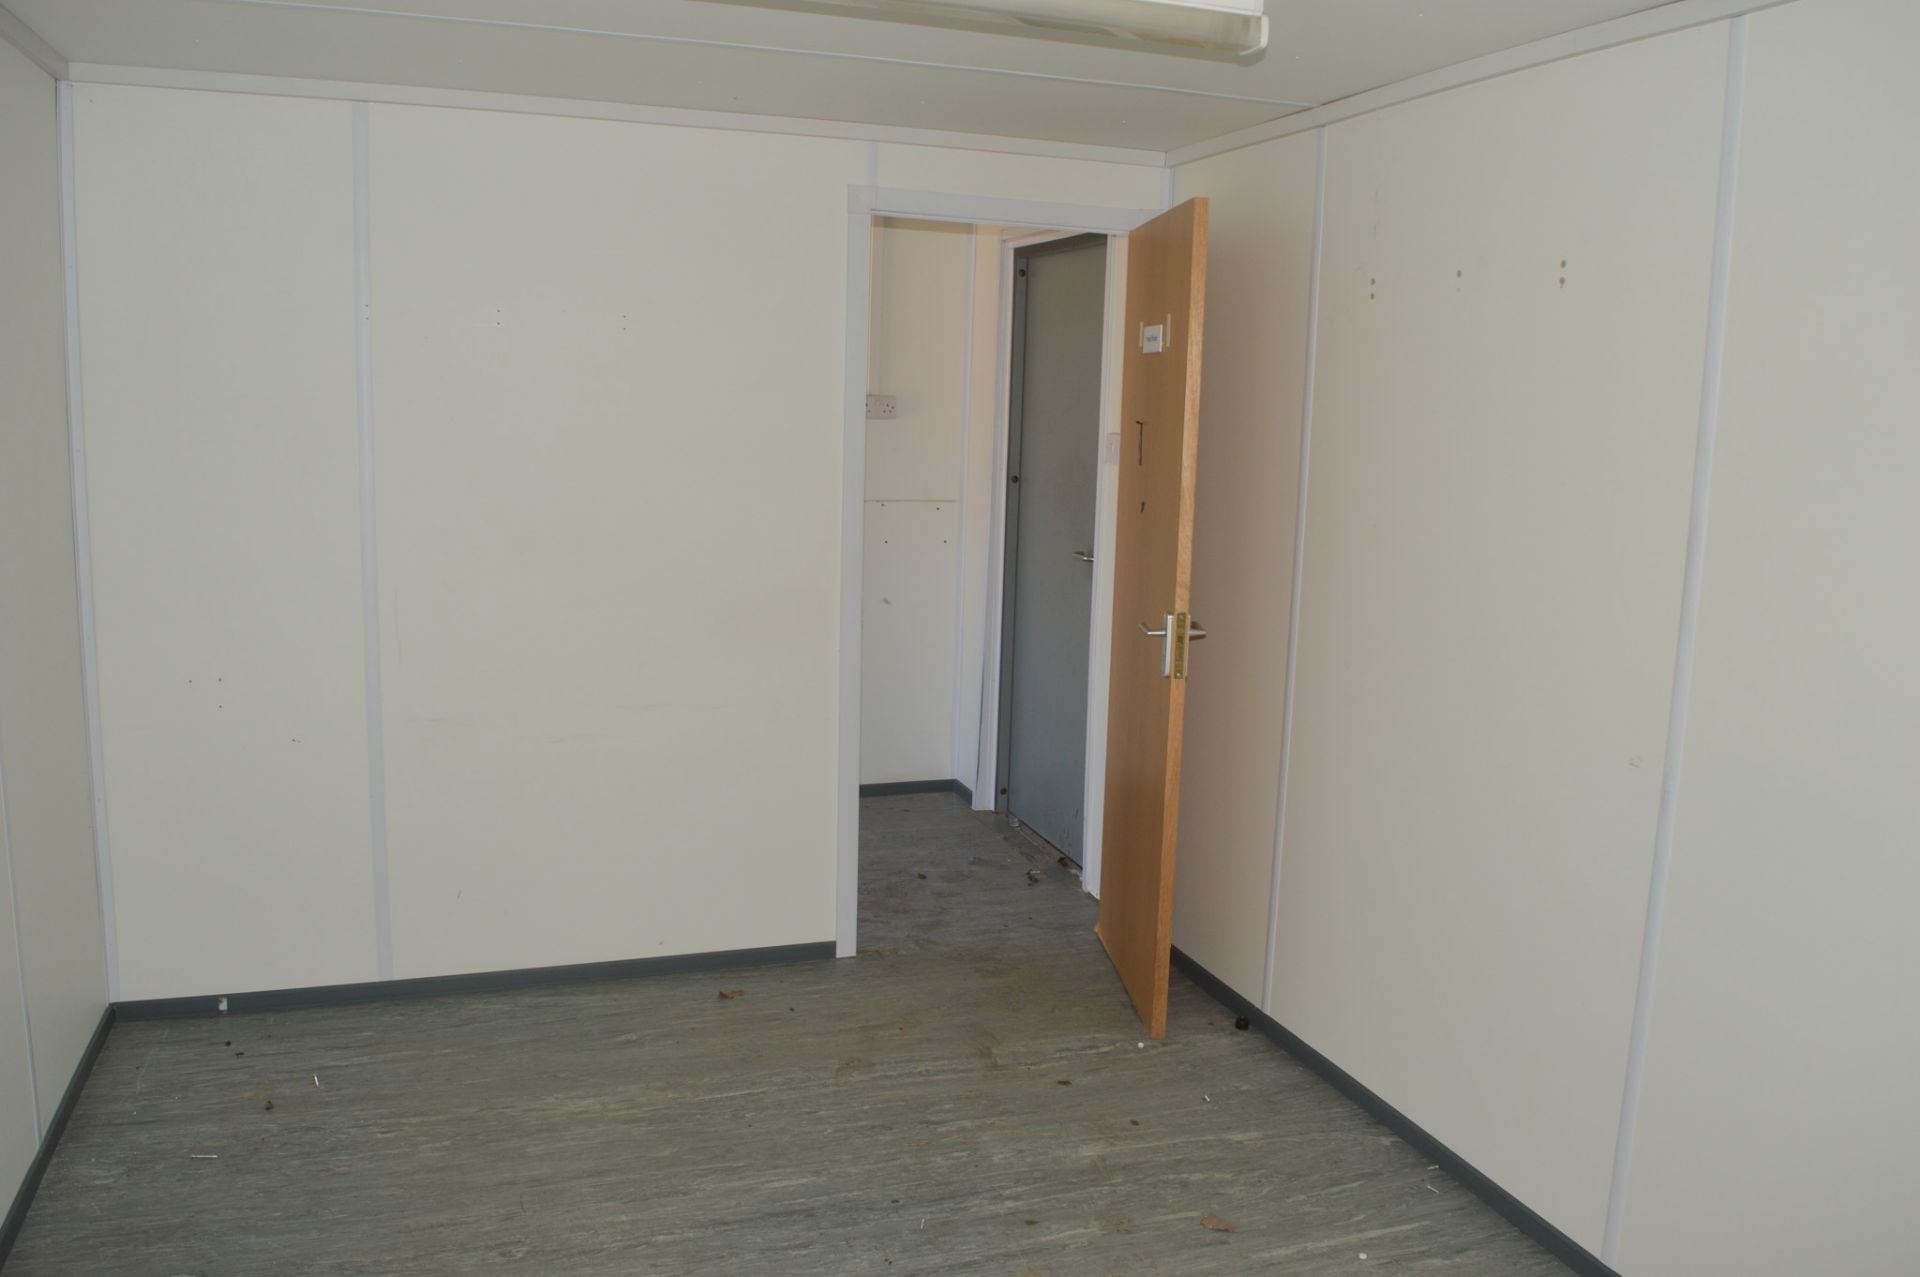 32 ft x 10 ft jack leg steel anti vandal site unit office c/w keys in office  *One door missing* - Image 9 of 9